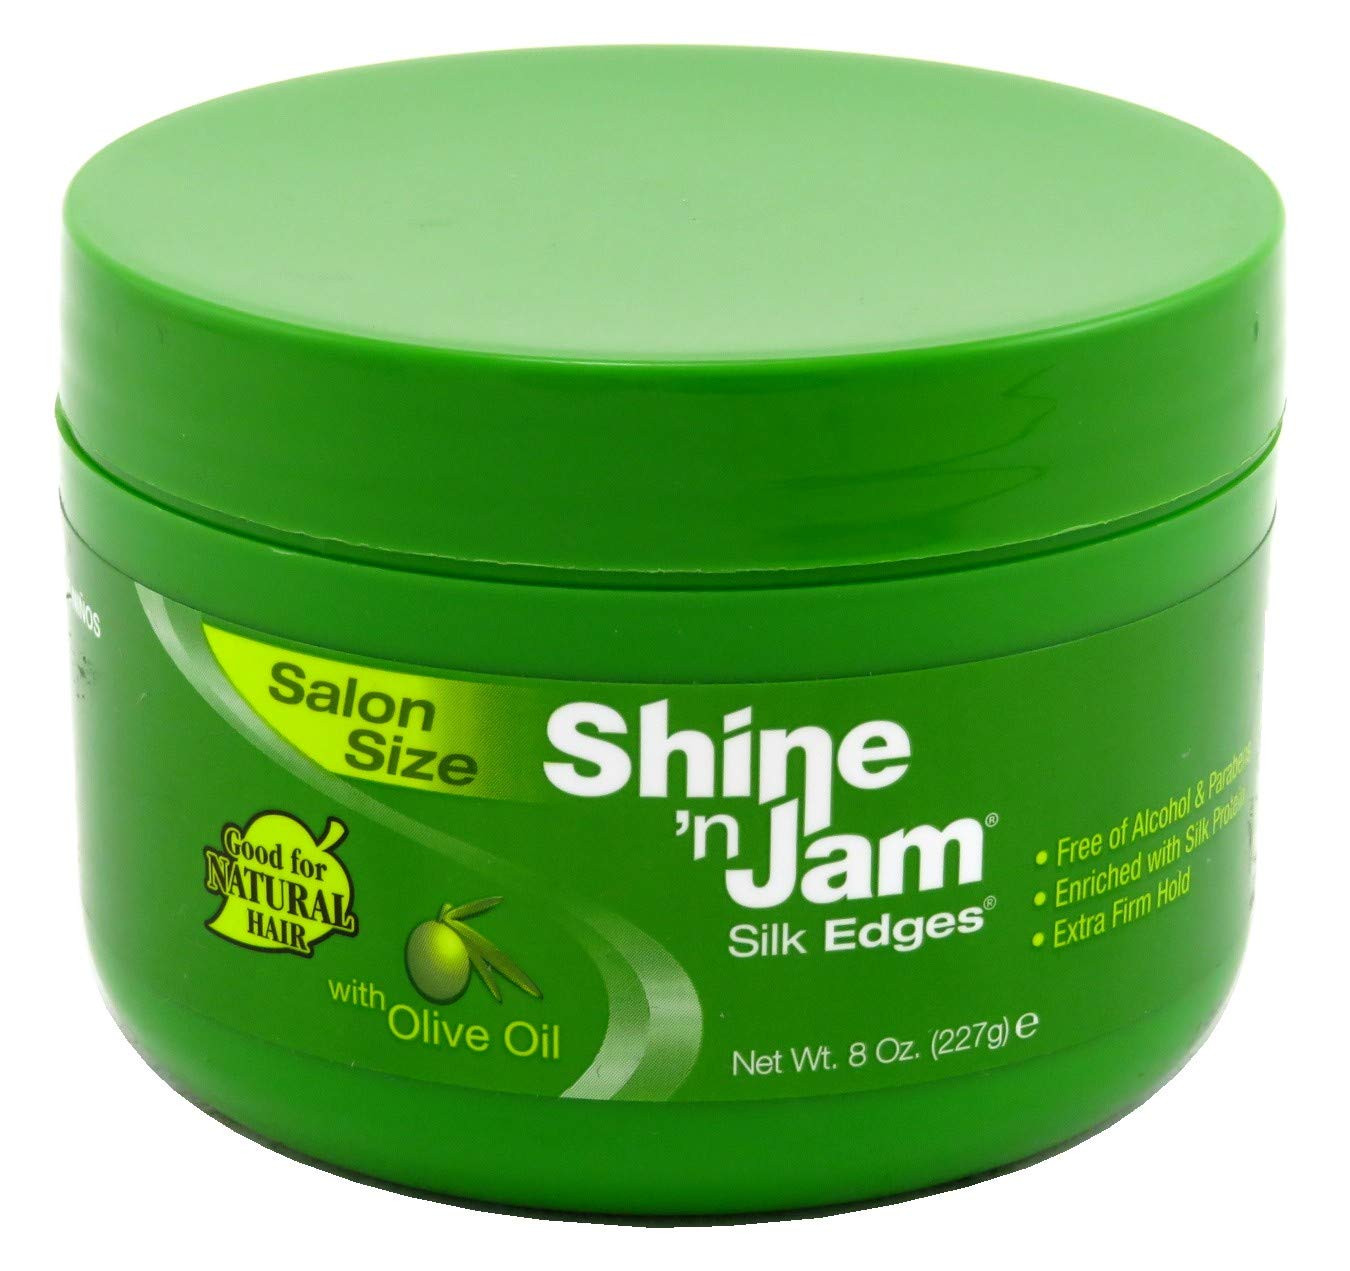 Ampro Shine 'n Jam Silk Edges With Olive Oil